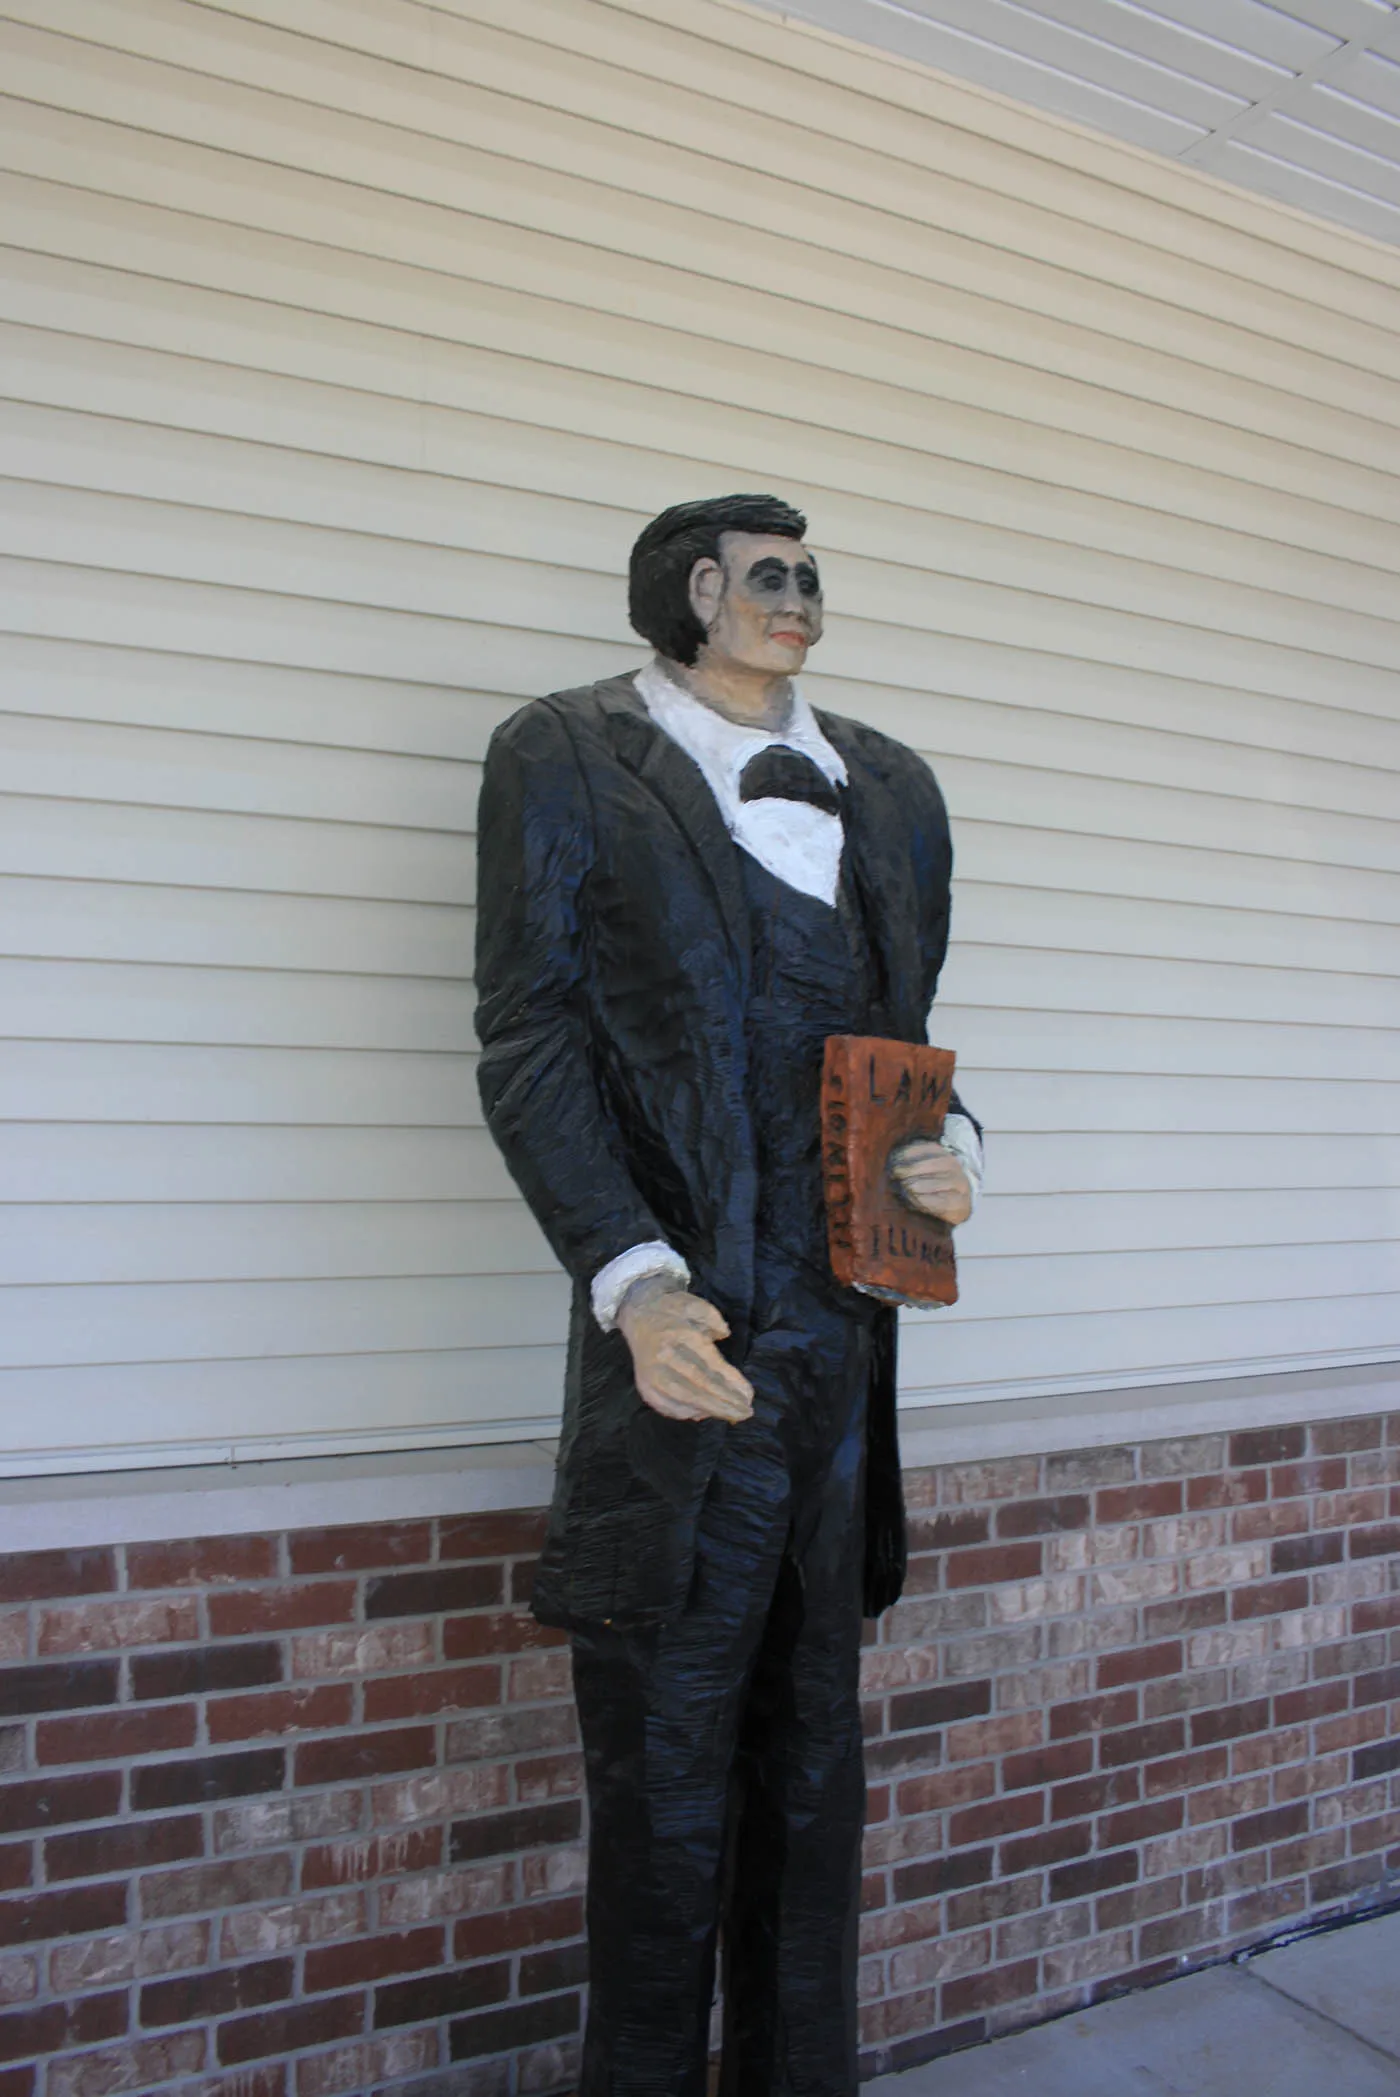 World's Tallest Abraham Lincoln Statue in Ashmore, Illinois